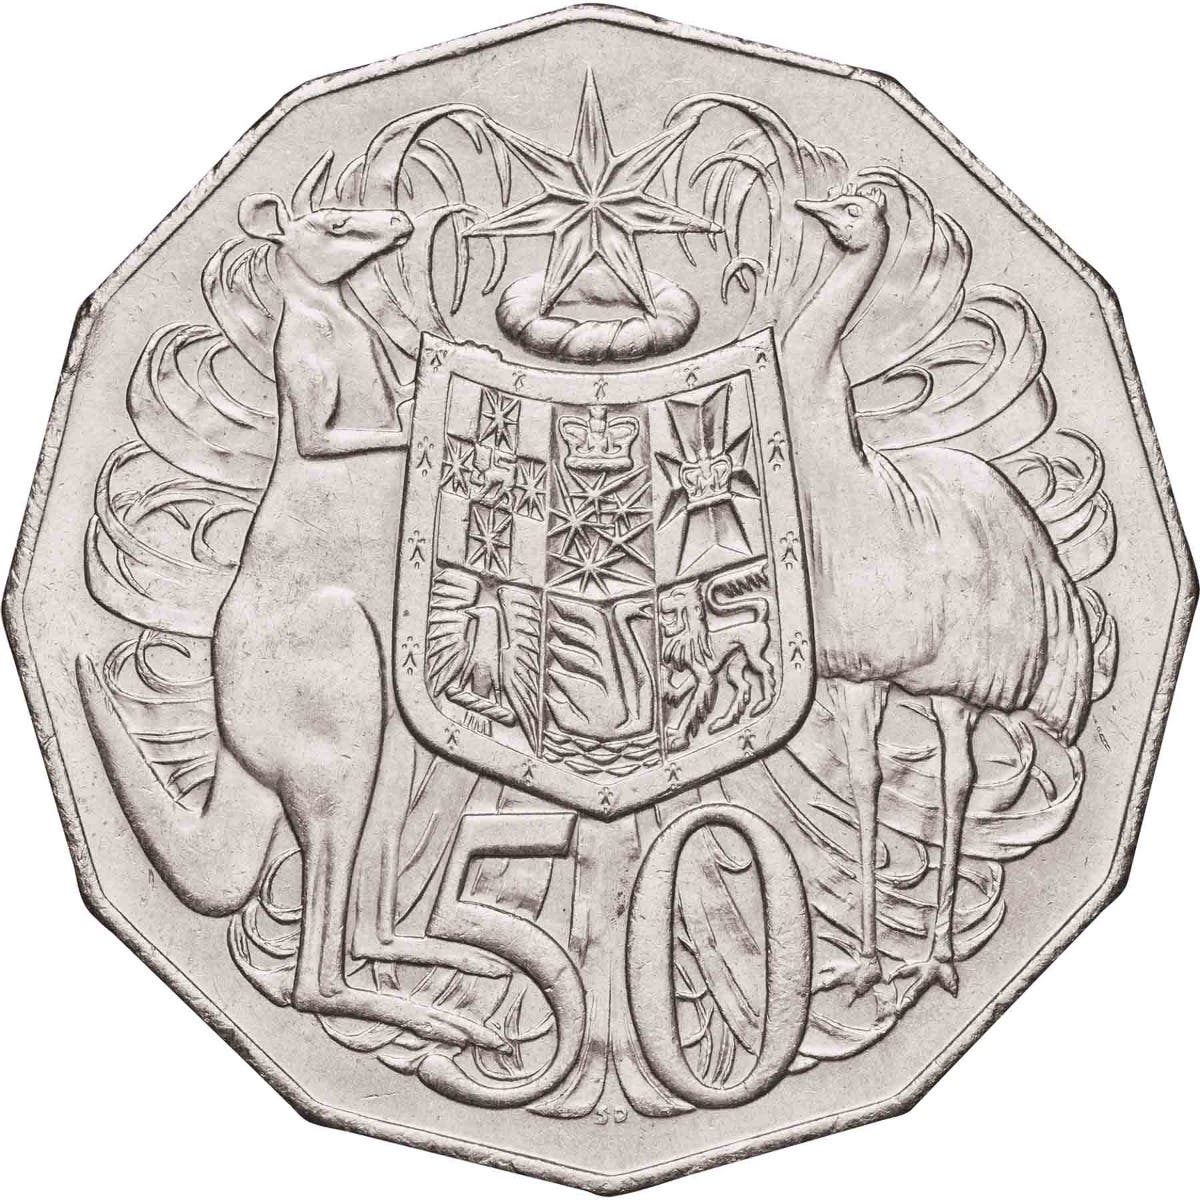 Queen Elizabeth II Raphael Maklouf Portrait 8-Coin Set